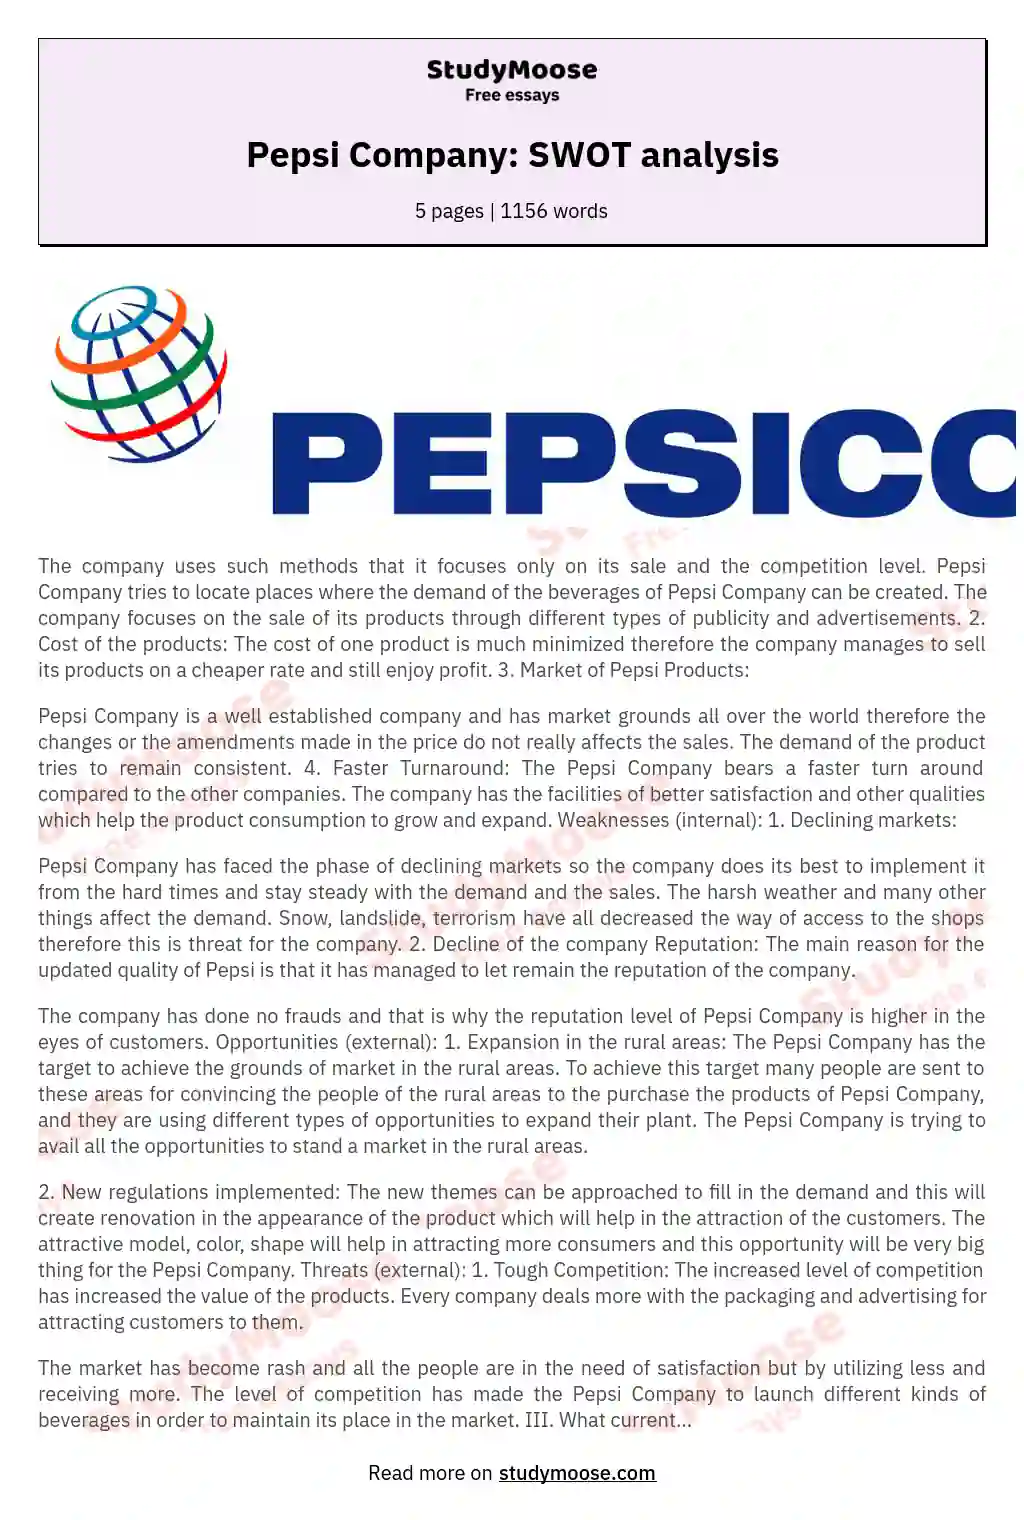 Pepsi Company: SWOT analysis essay